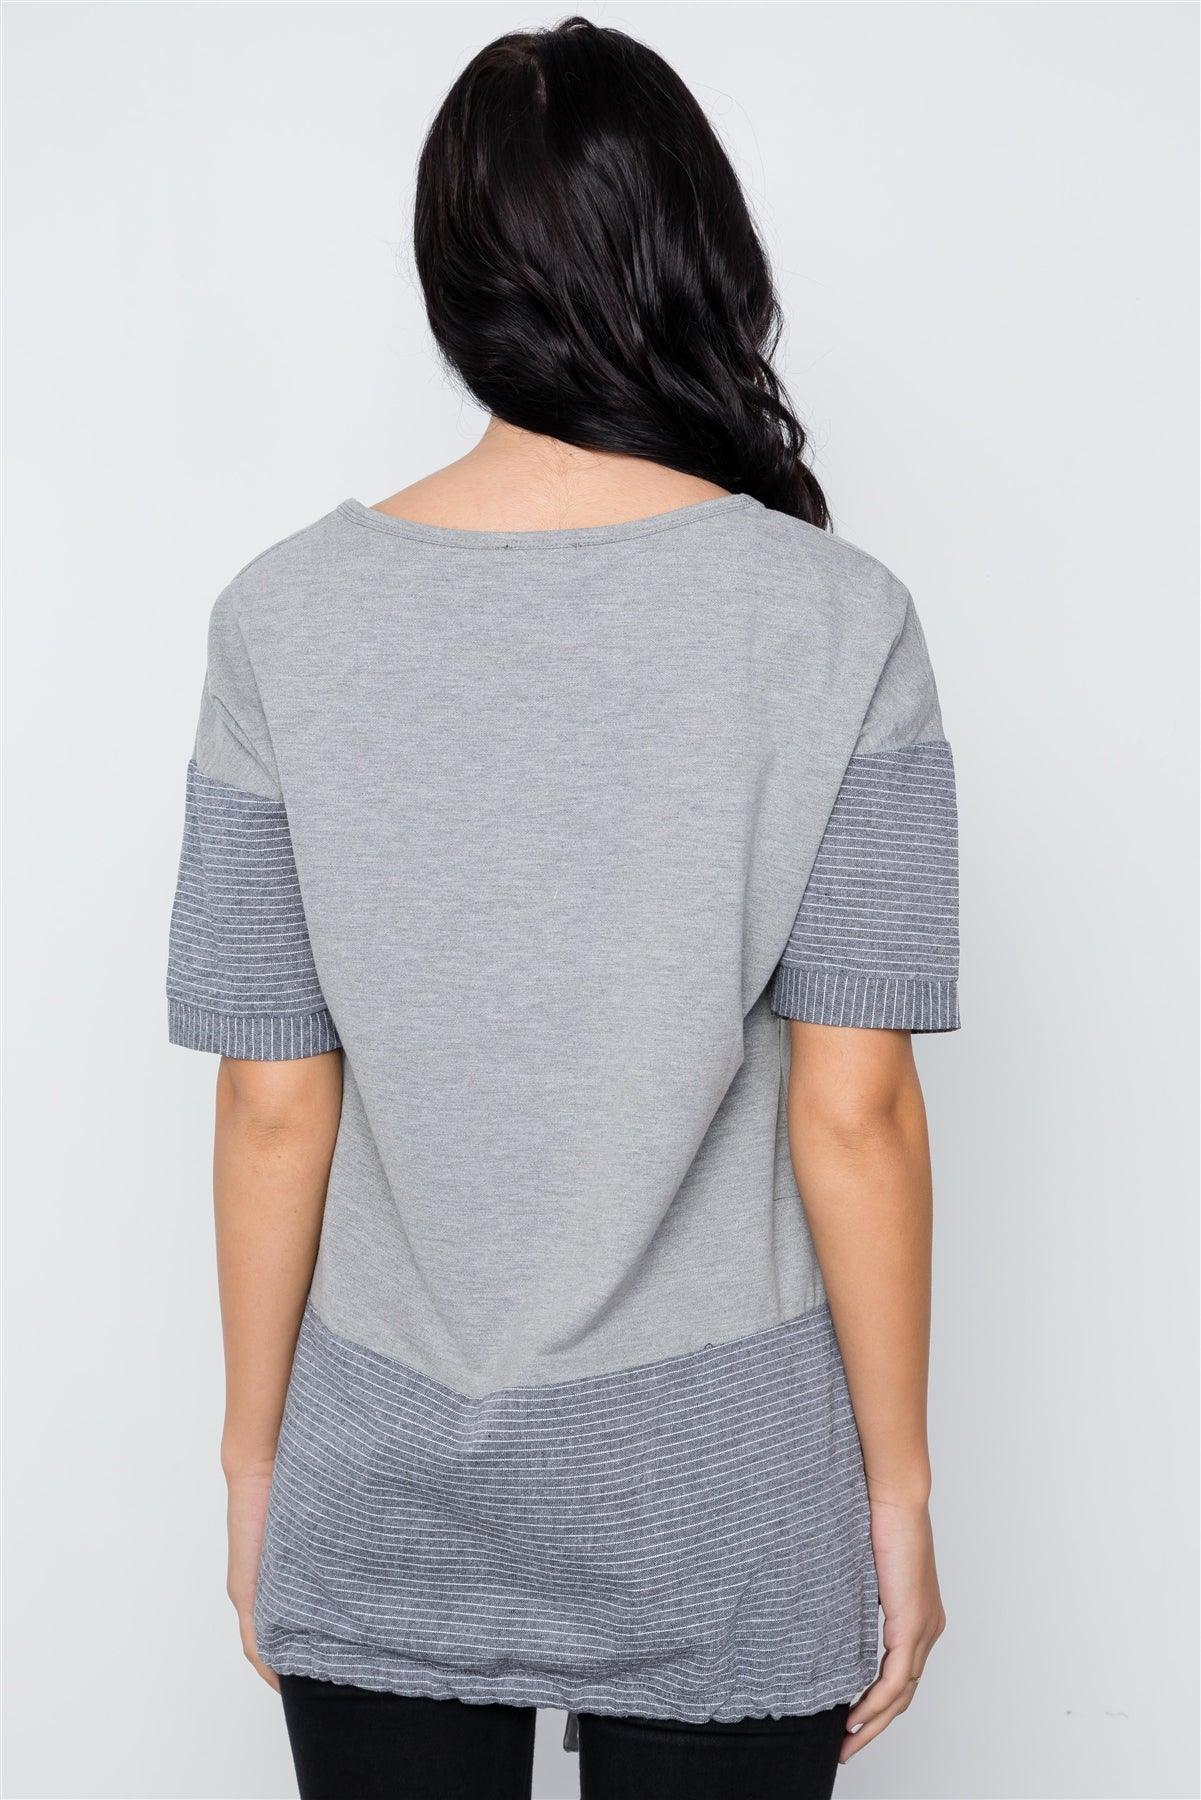 Grey Contrast Stripe Short Sleeve Top / 2-2-2